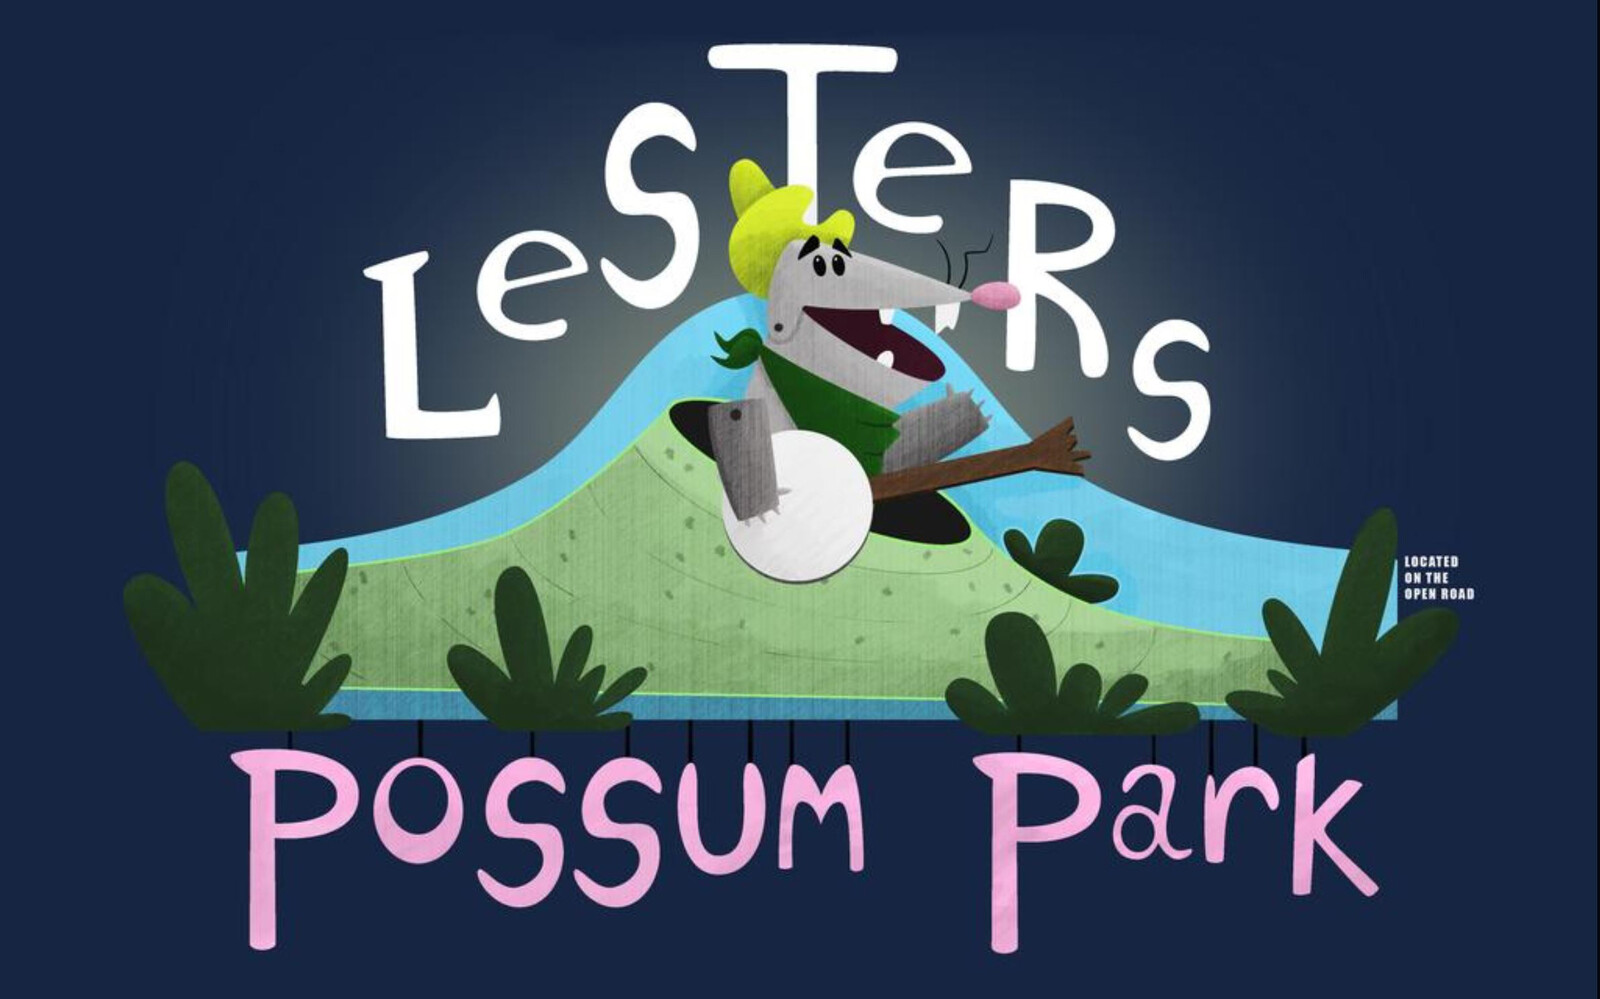 Personal Work - Tee Public Design - Lester's Possum Park